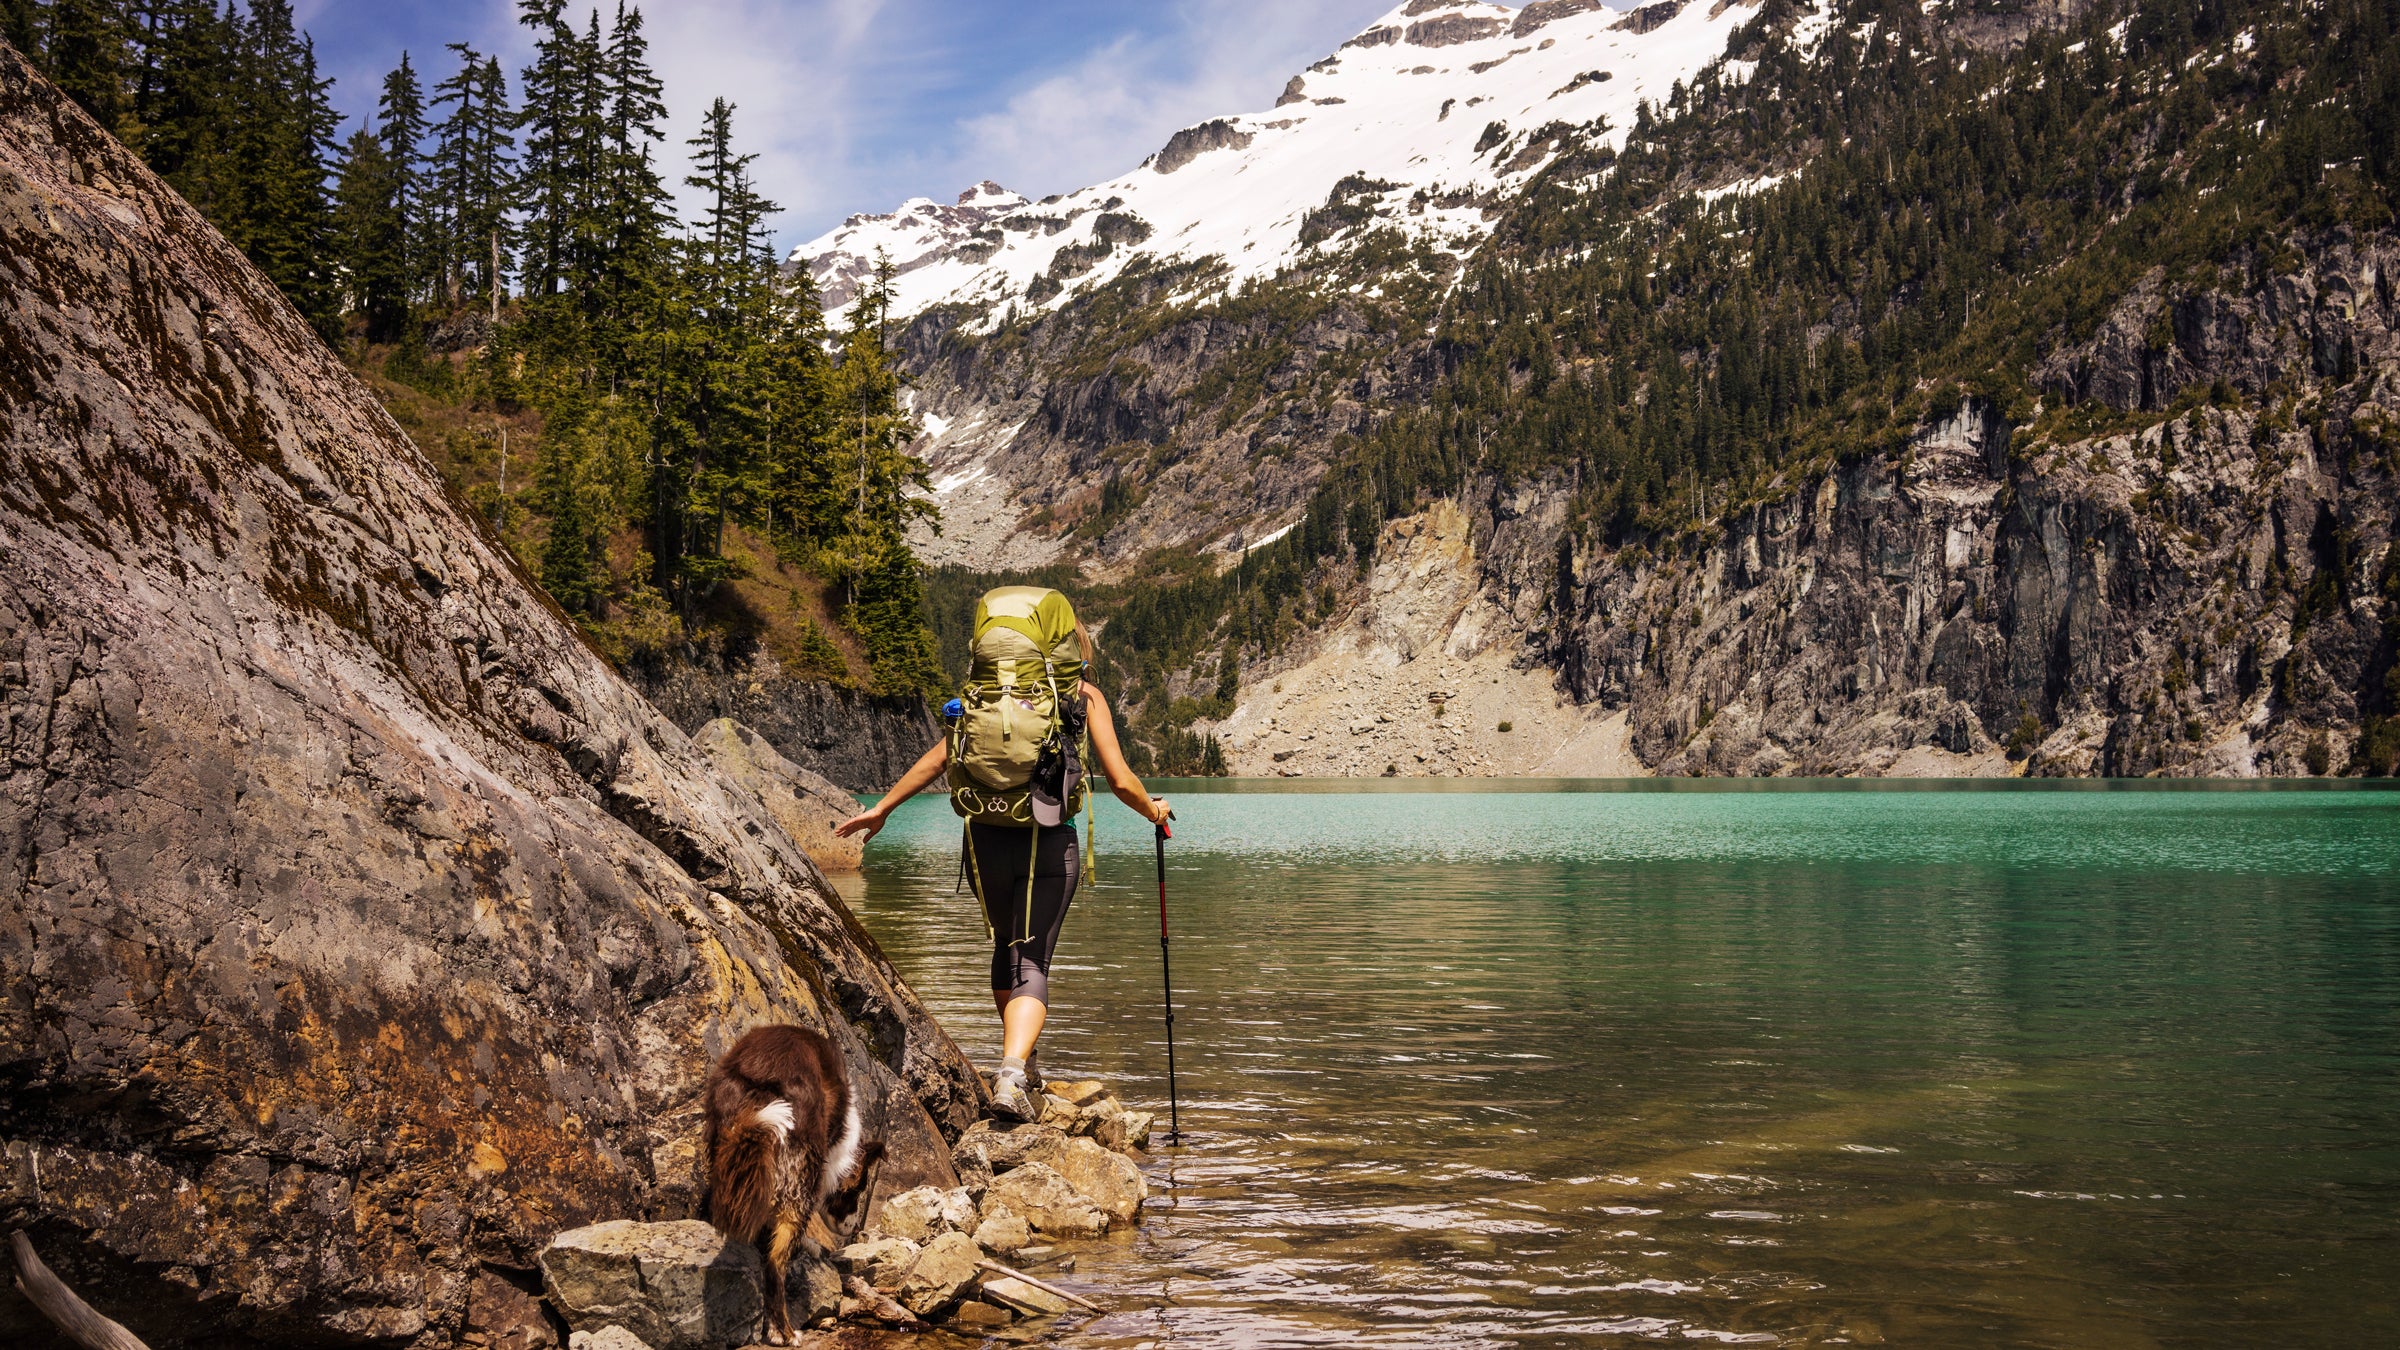 https://cdn.outsideonline.com/wp-content/uploads/2020/10/23/woman-dog-trekking-poles-hike_h.jpg